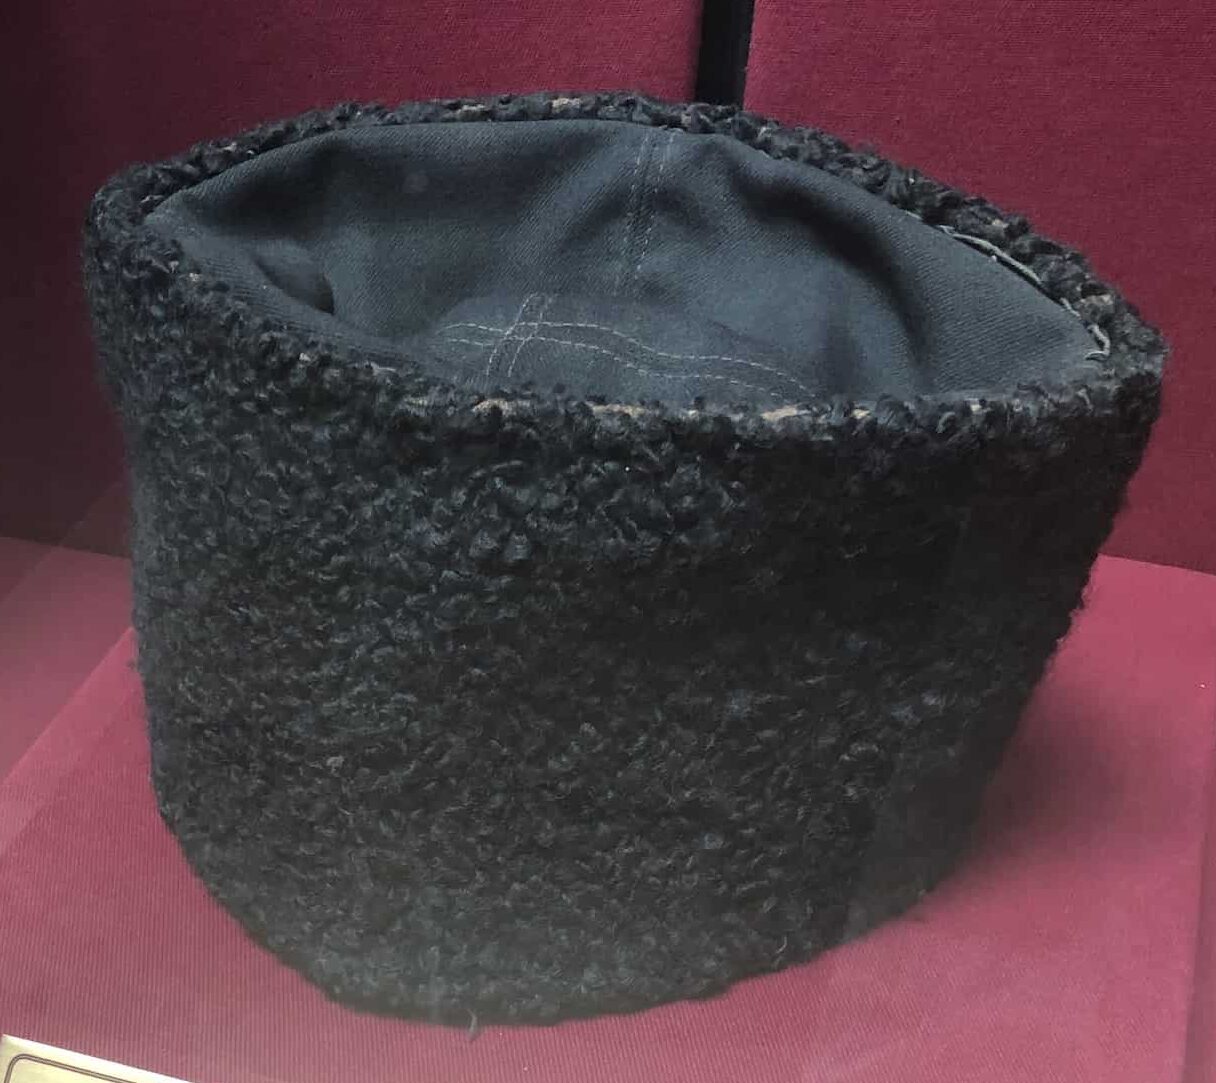 Hat belonging to the assassinated Hasan Rıza Pasha (1871-1913)